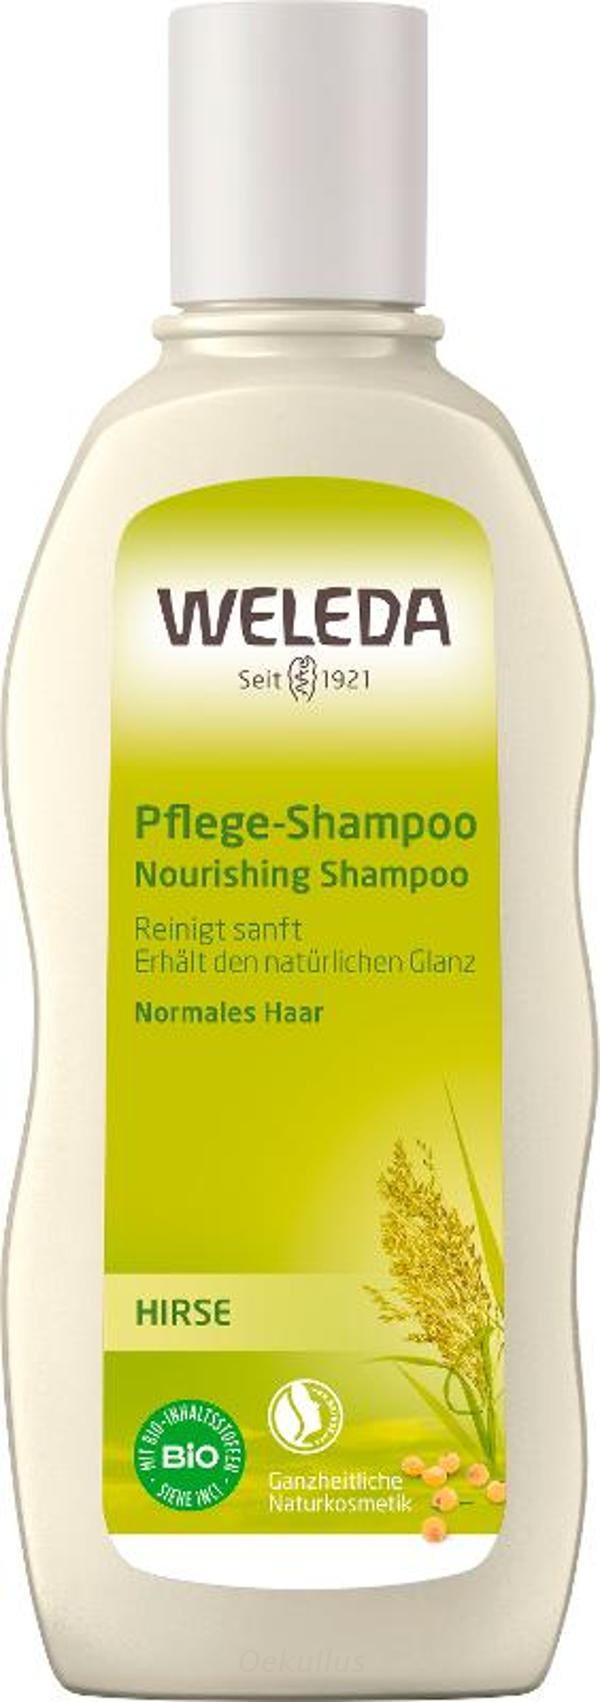 Produktfoto zu Hirse-Pflege-Shampoo